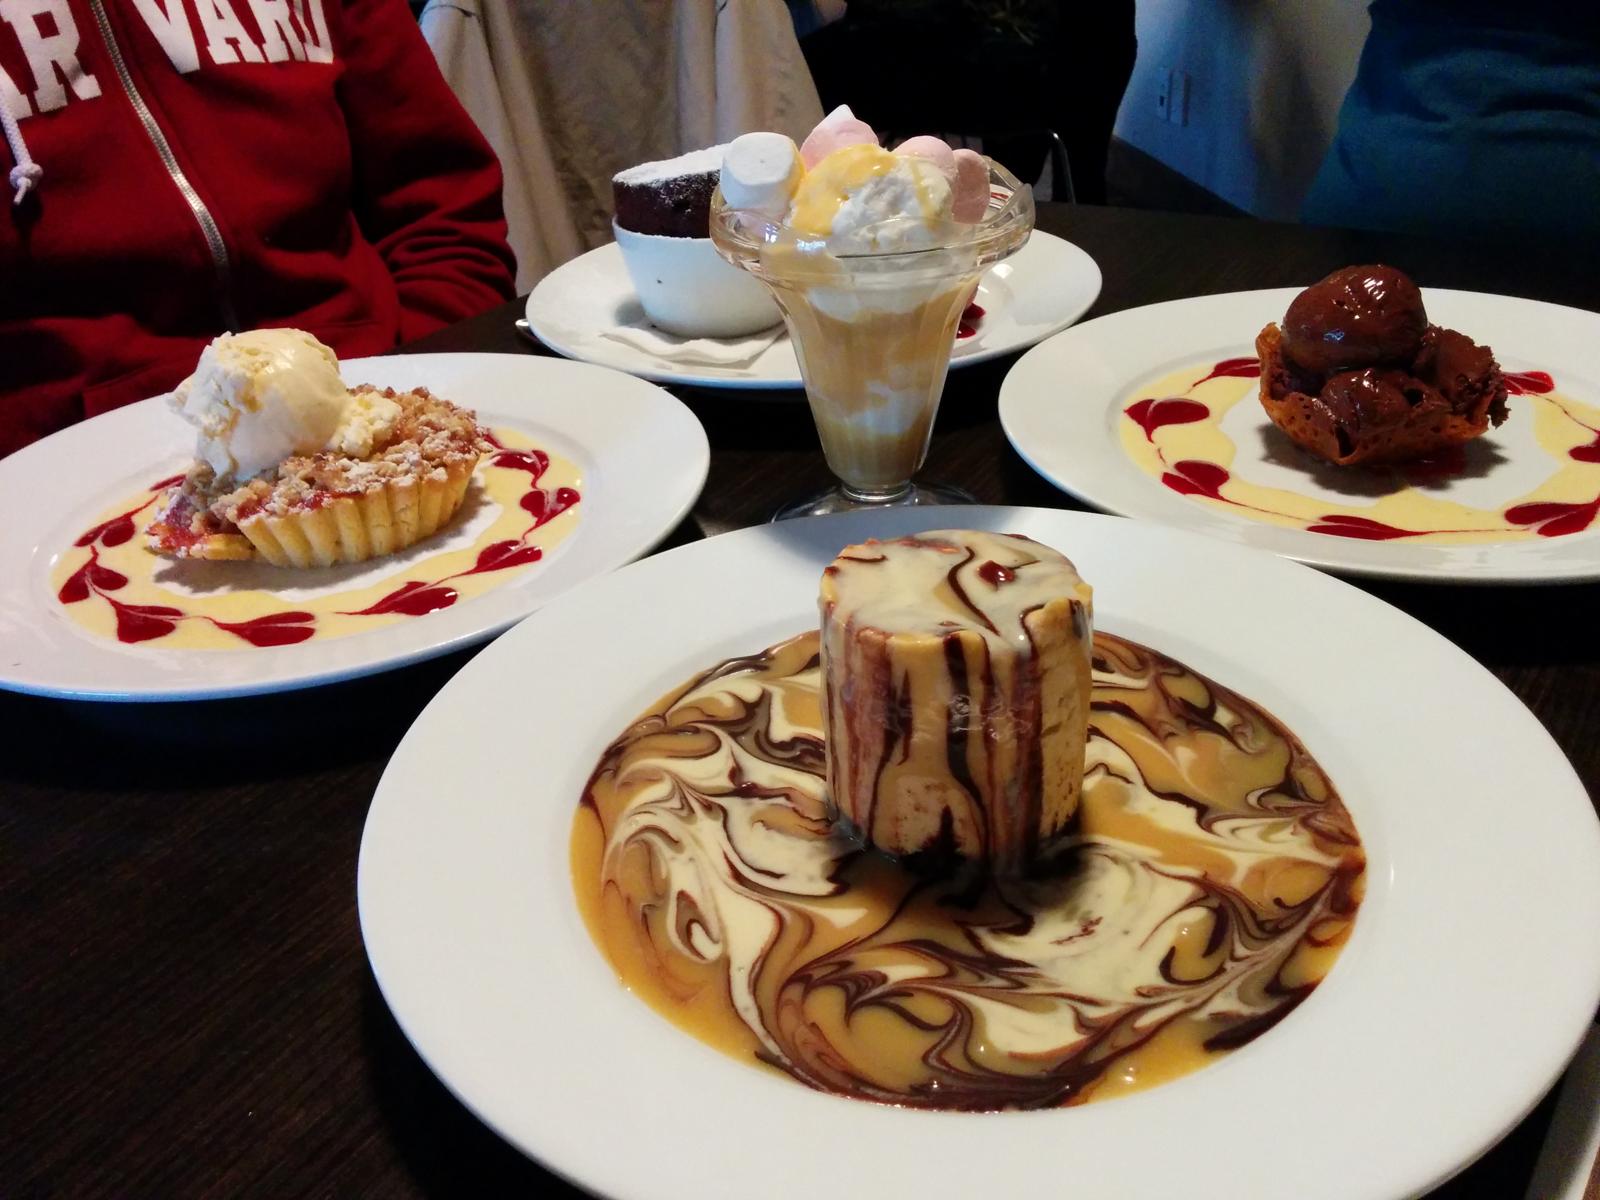 Five desserts: Before